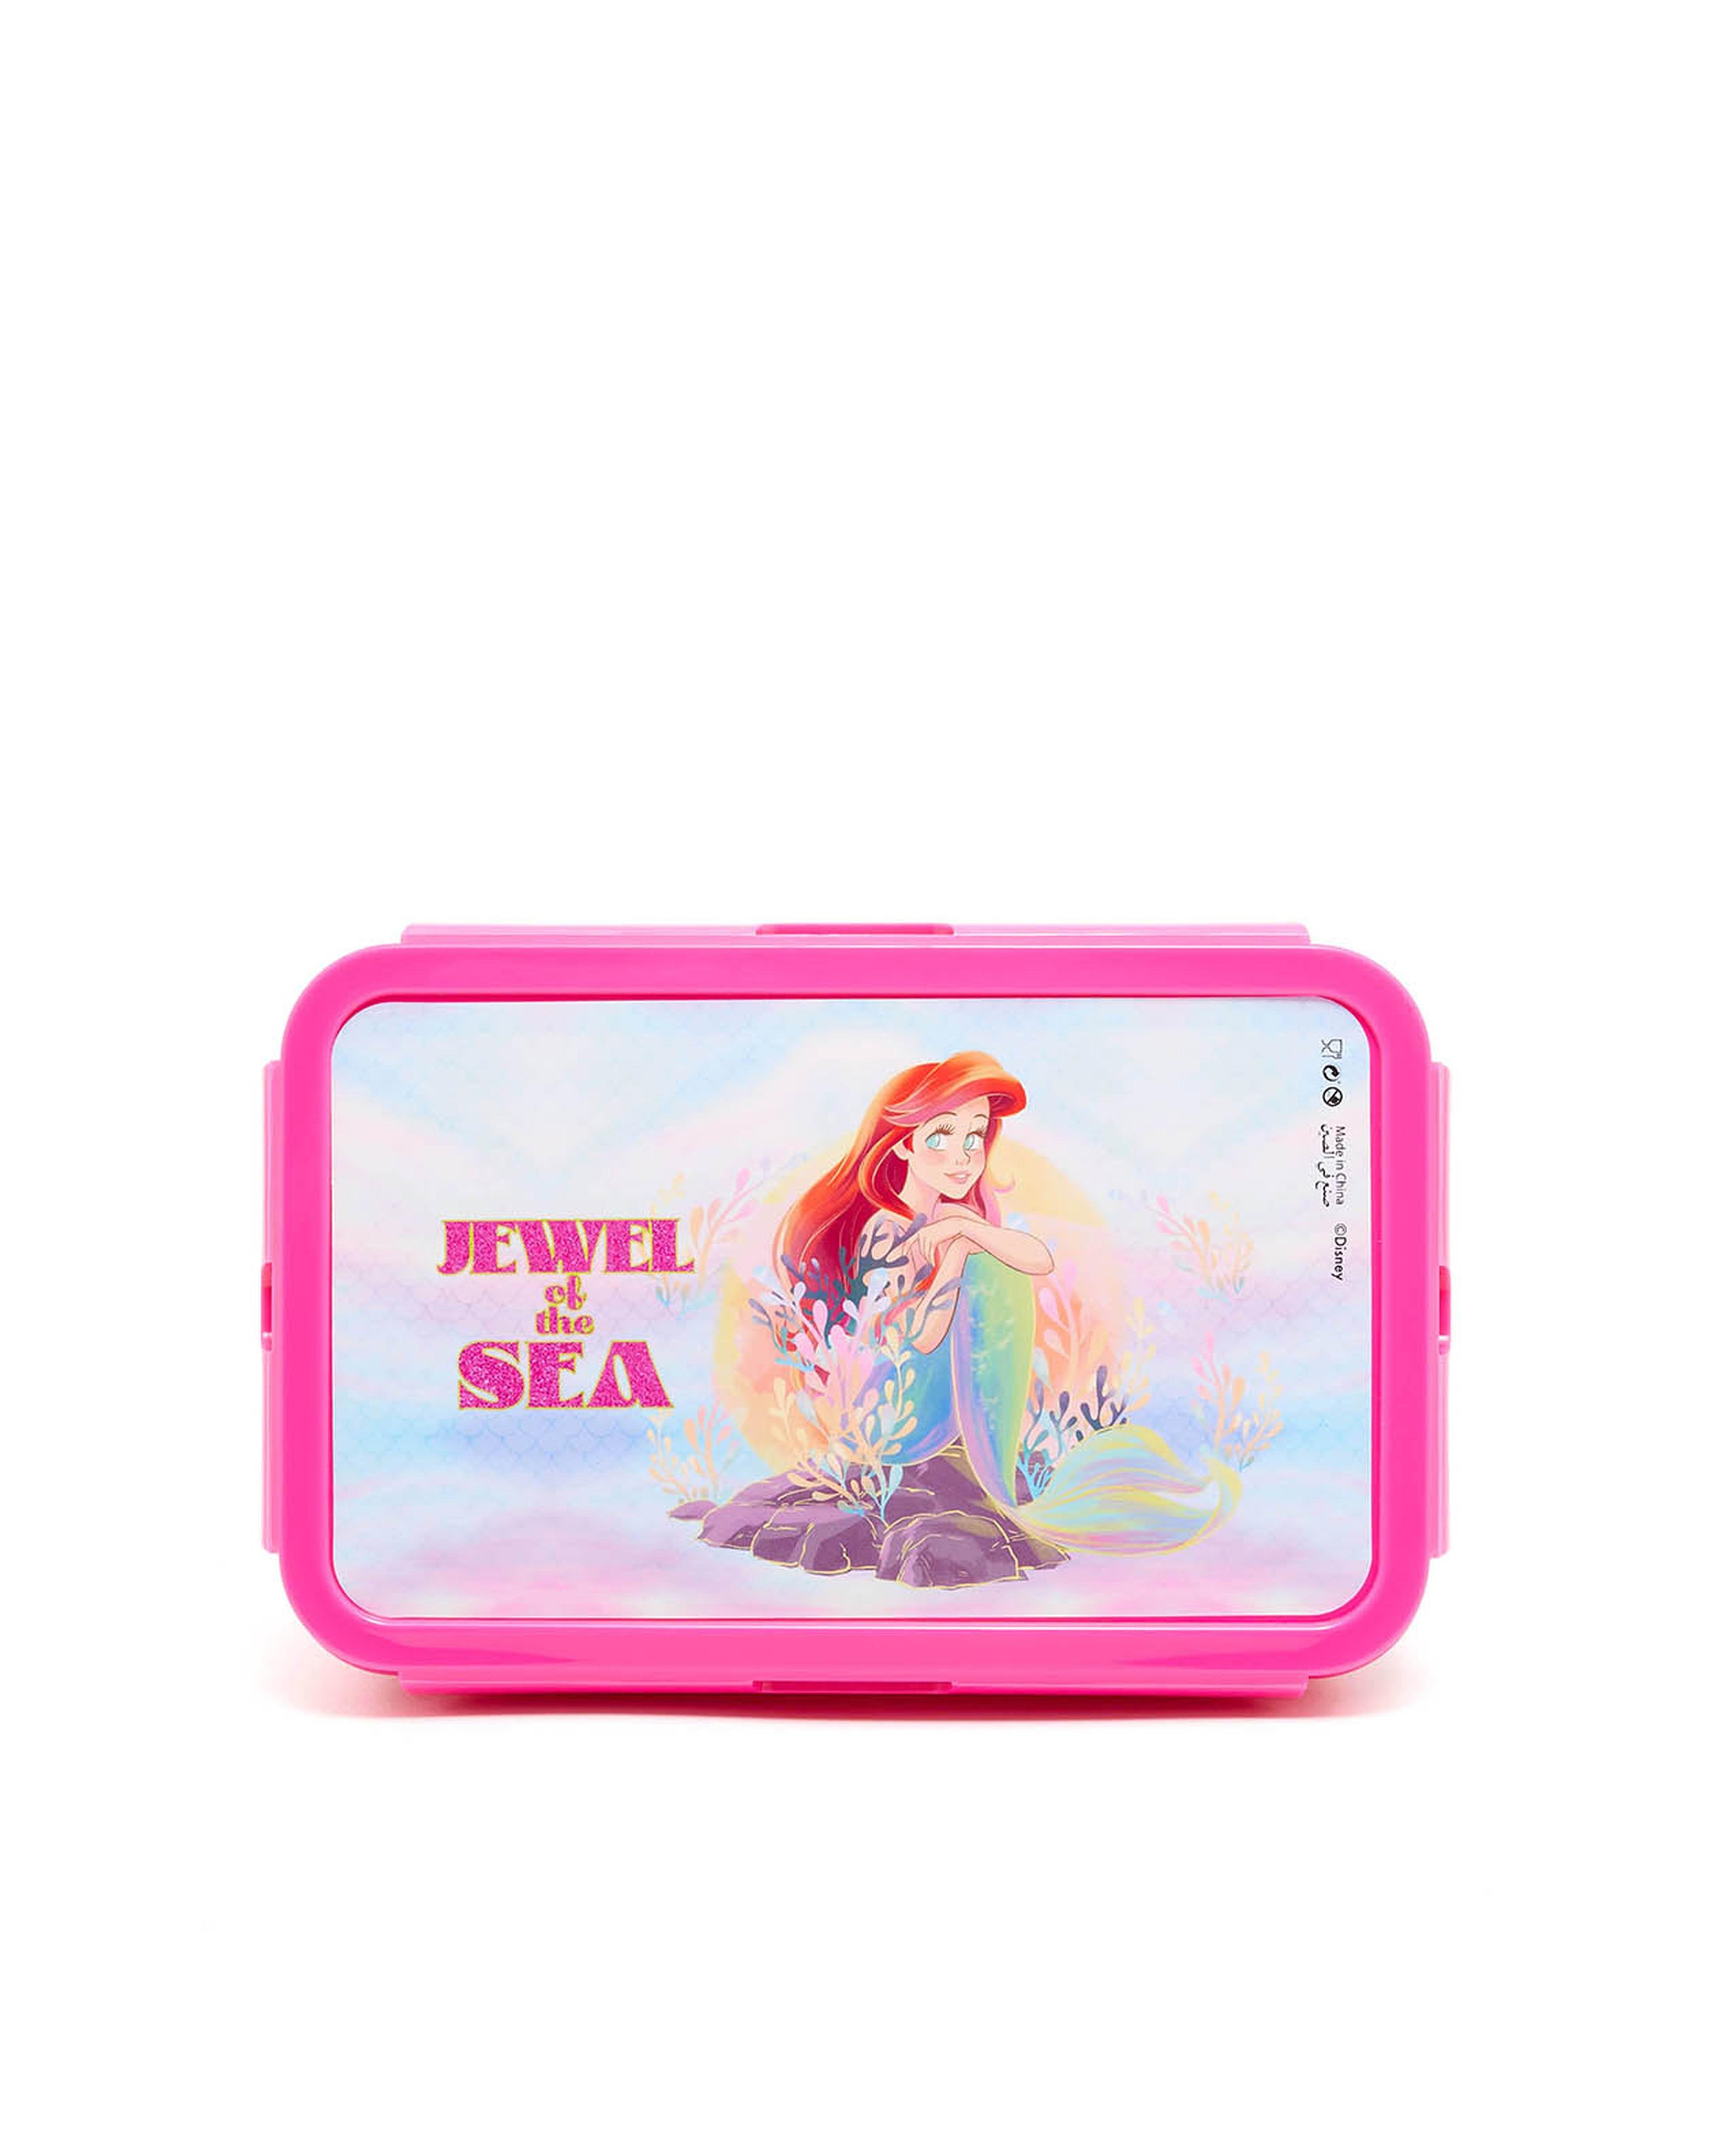 Princess Bento Lunch Box